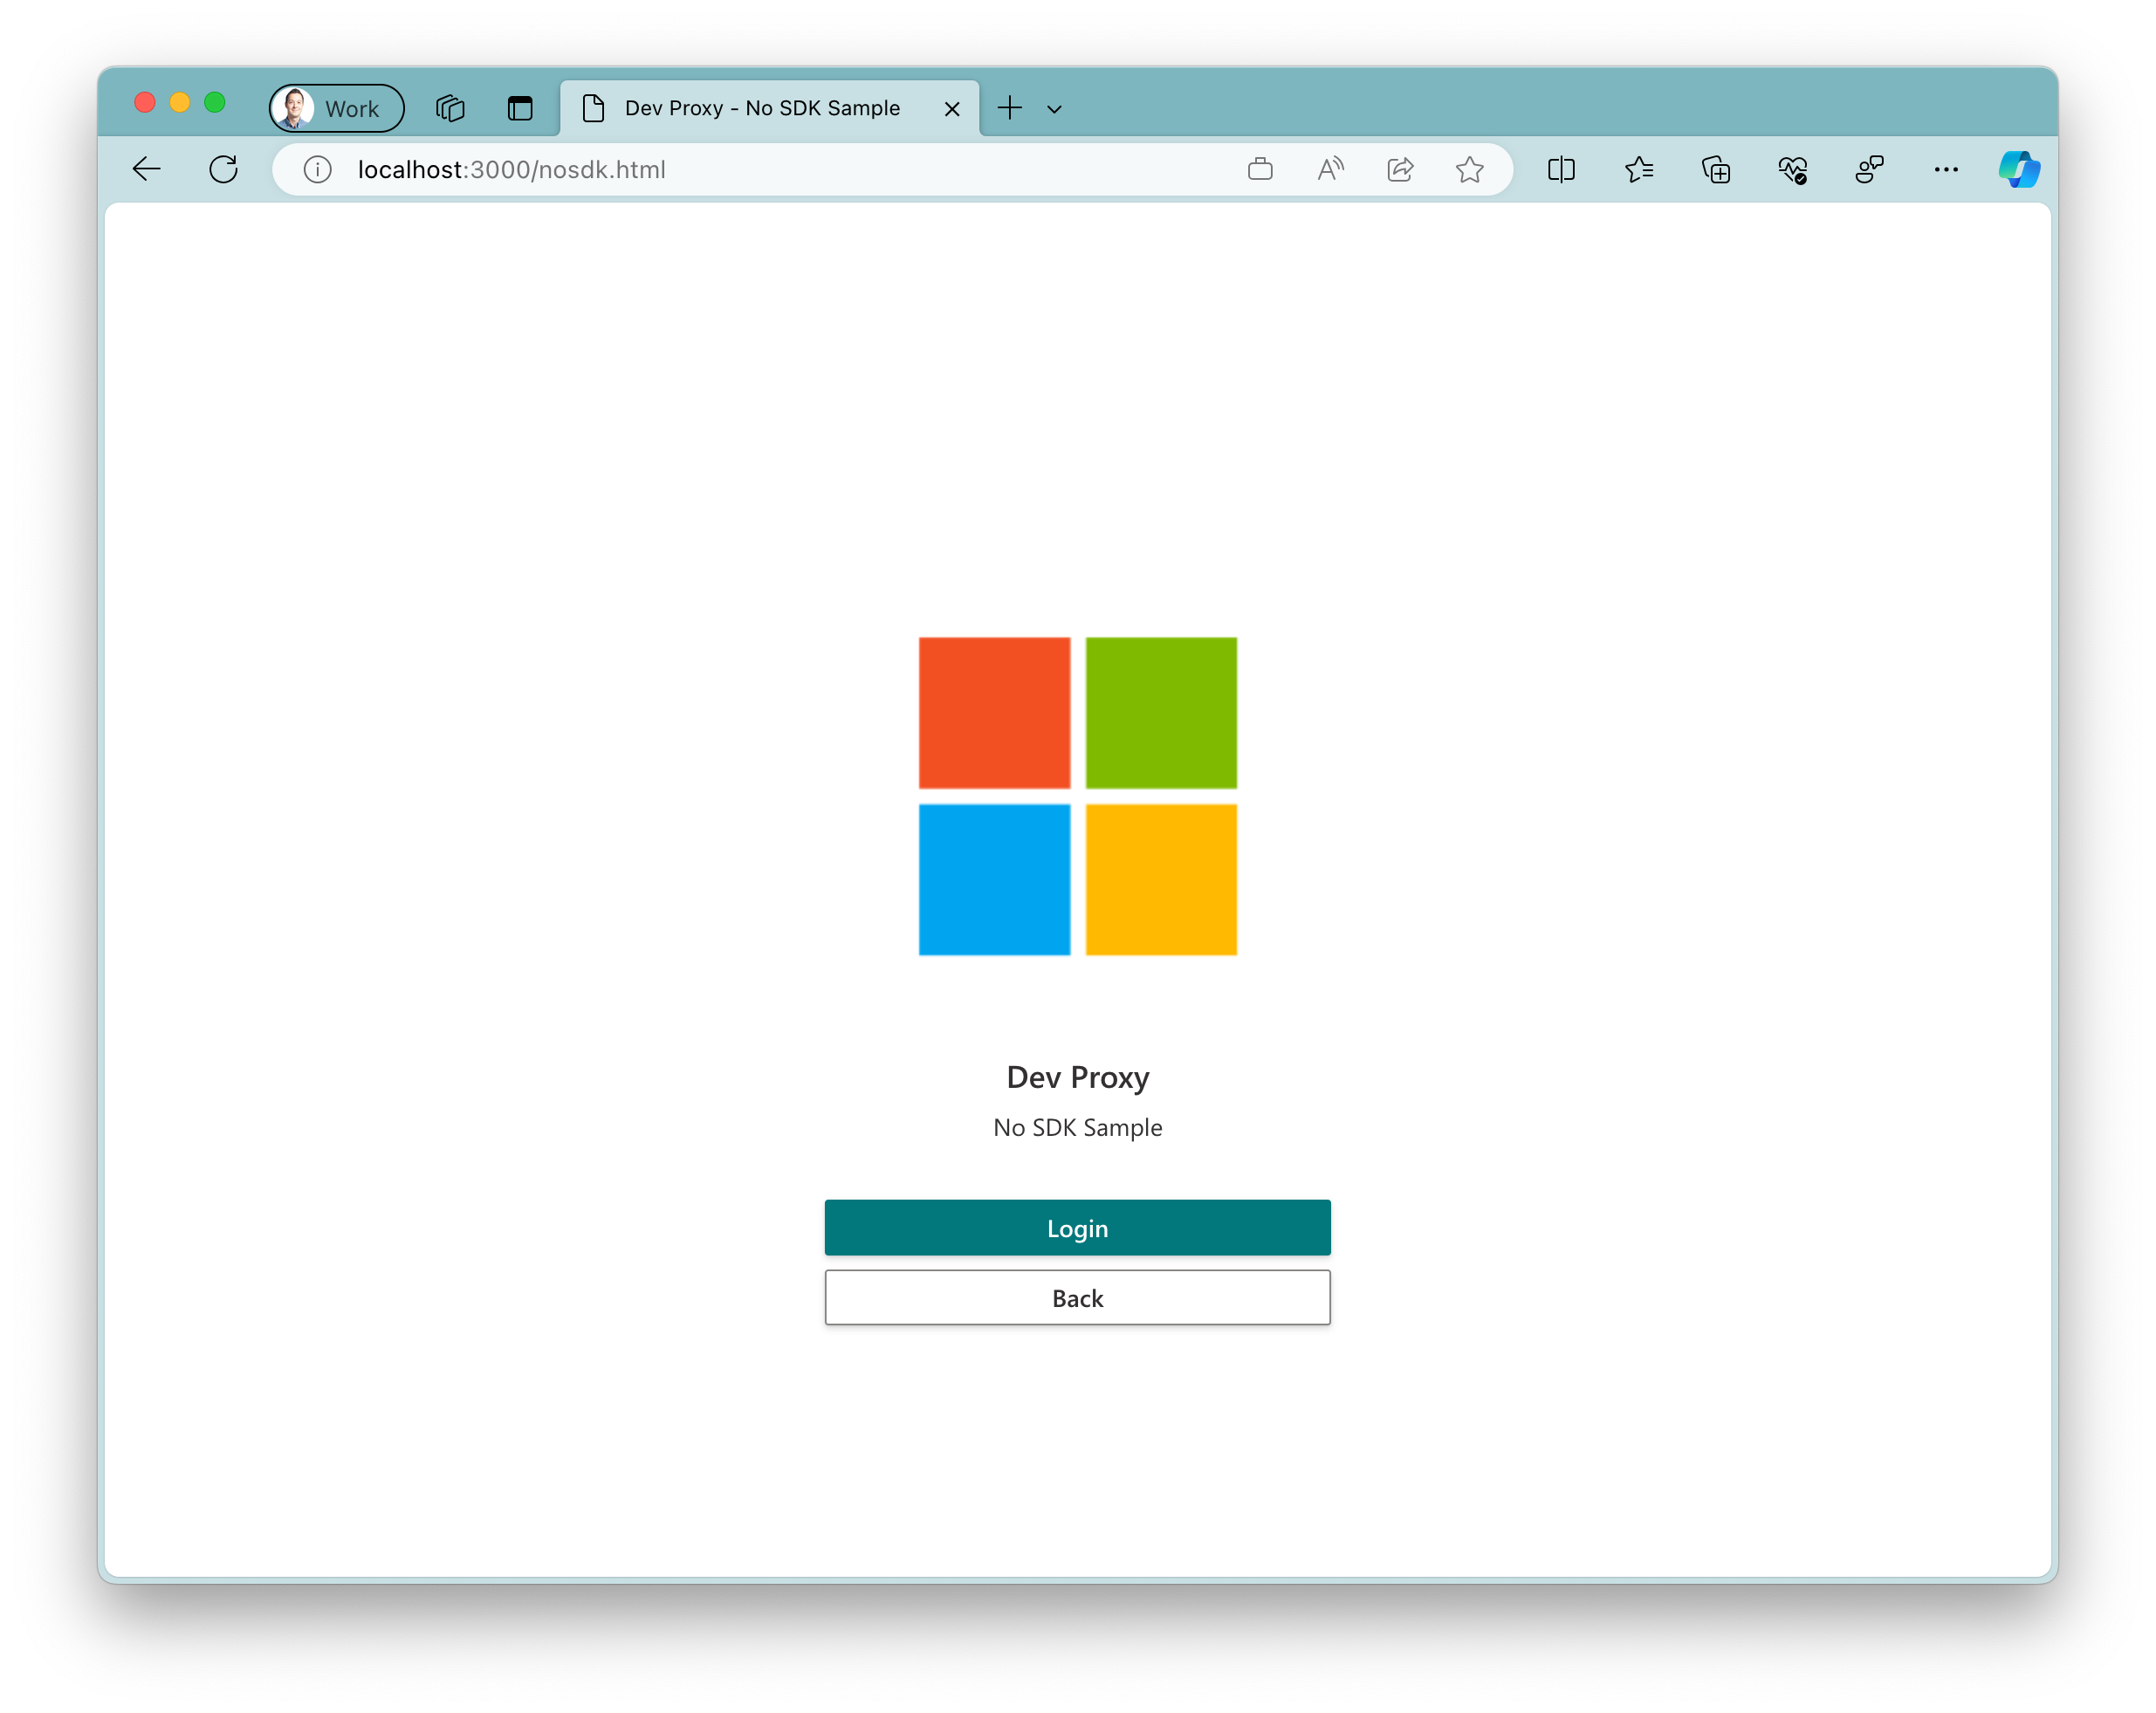 Windows 11 Microsoft Edge 브라우저에서 실행되는 샘플 앱의 스크린샷 앱 아래에 두 개의 단추가 있는 큰 Microsoft 로고가 표시됩니다. '로그인' 텍스트가 있는 기본 단추와 '뒤로' 텍스트가 있는 보조 단추입니다.